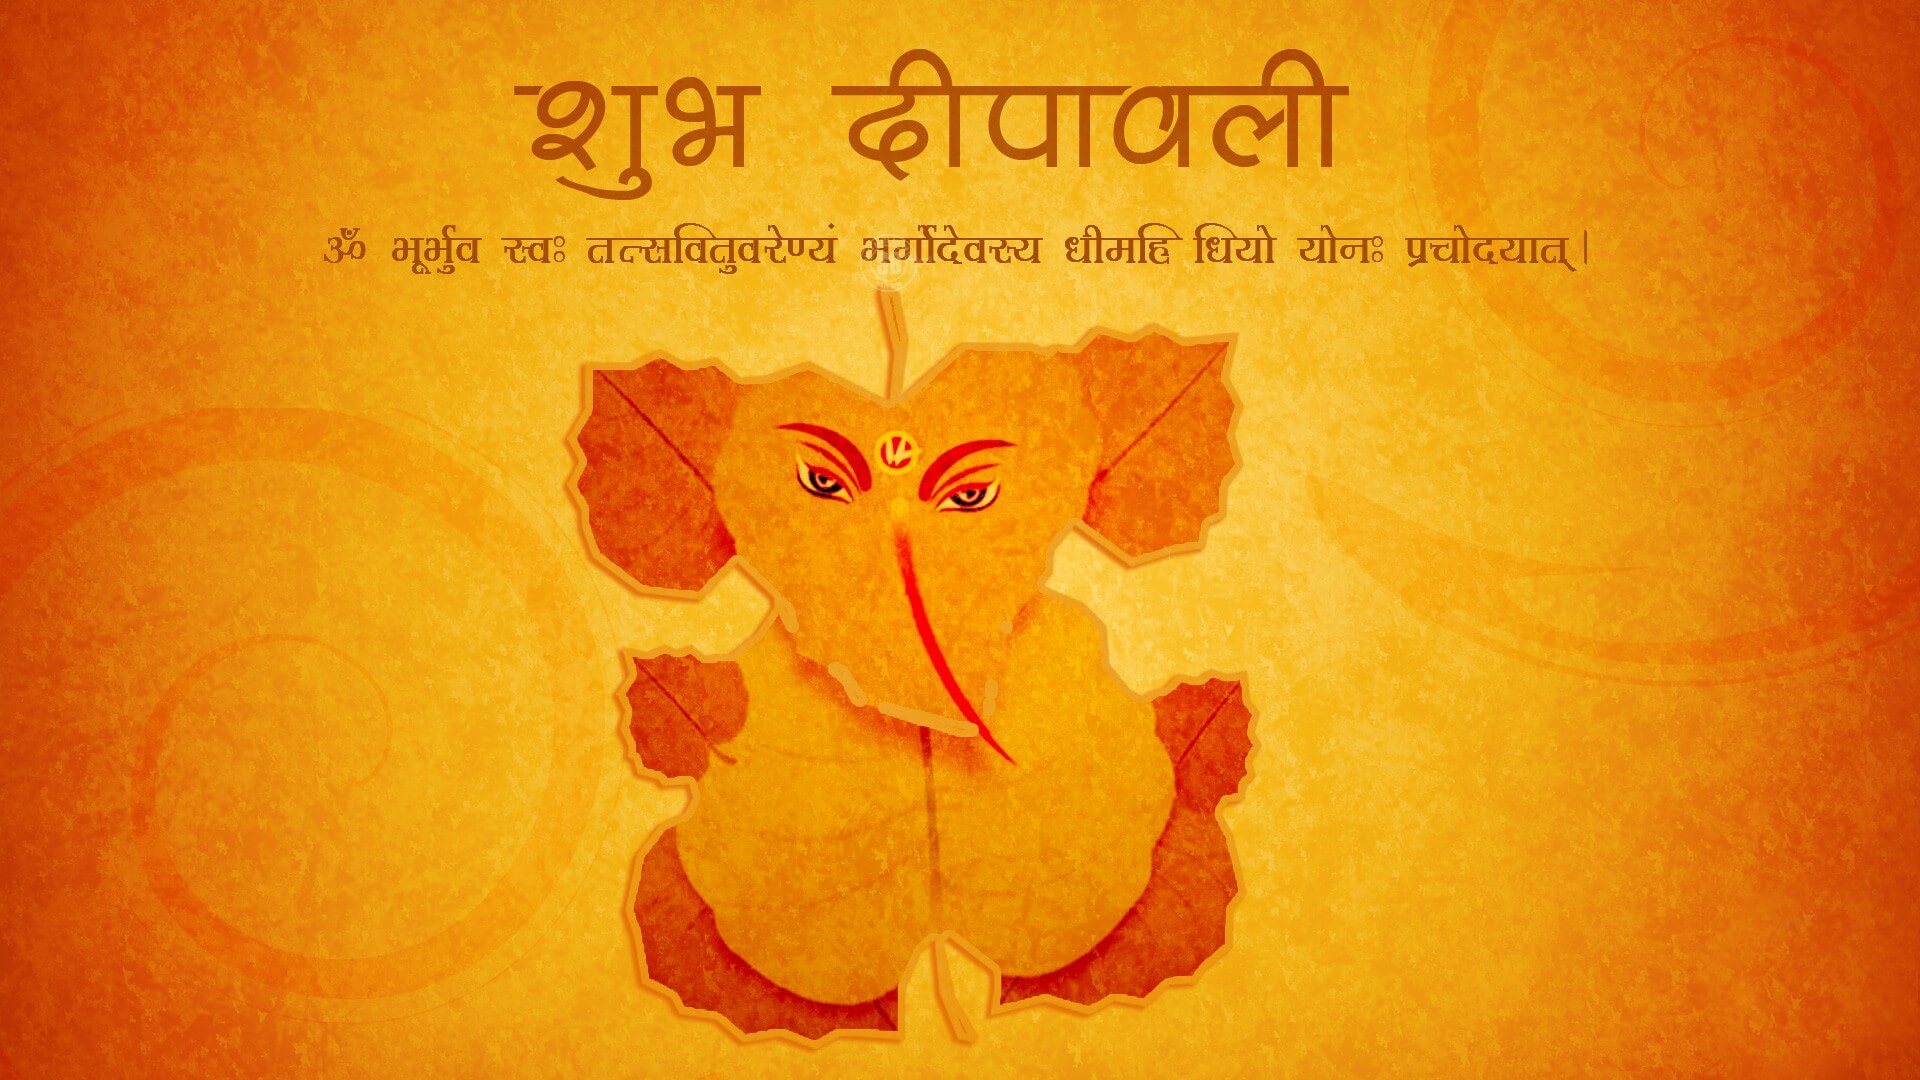 Download-Happy-Diwali-2015-HD-Wallpapers-facebook-mobile-desktop-cgfrog-25-in-hindi